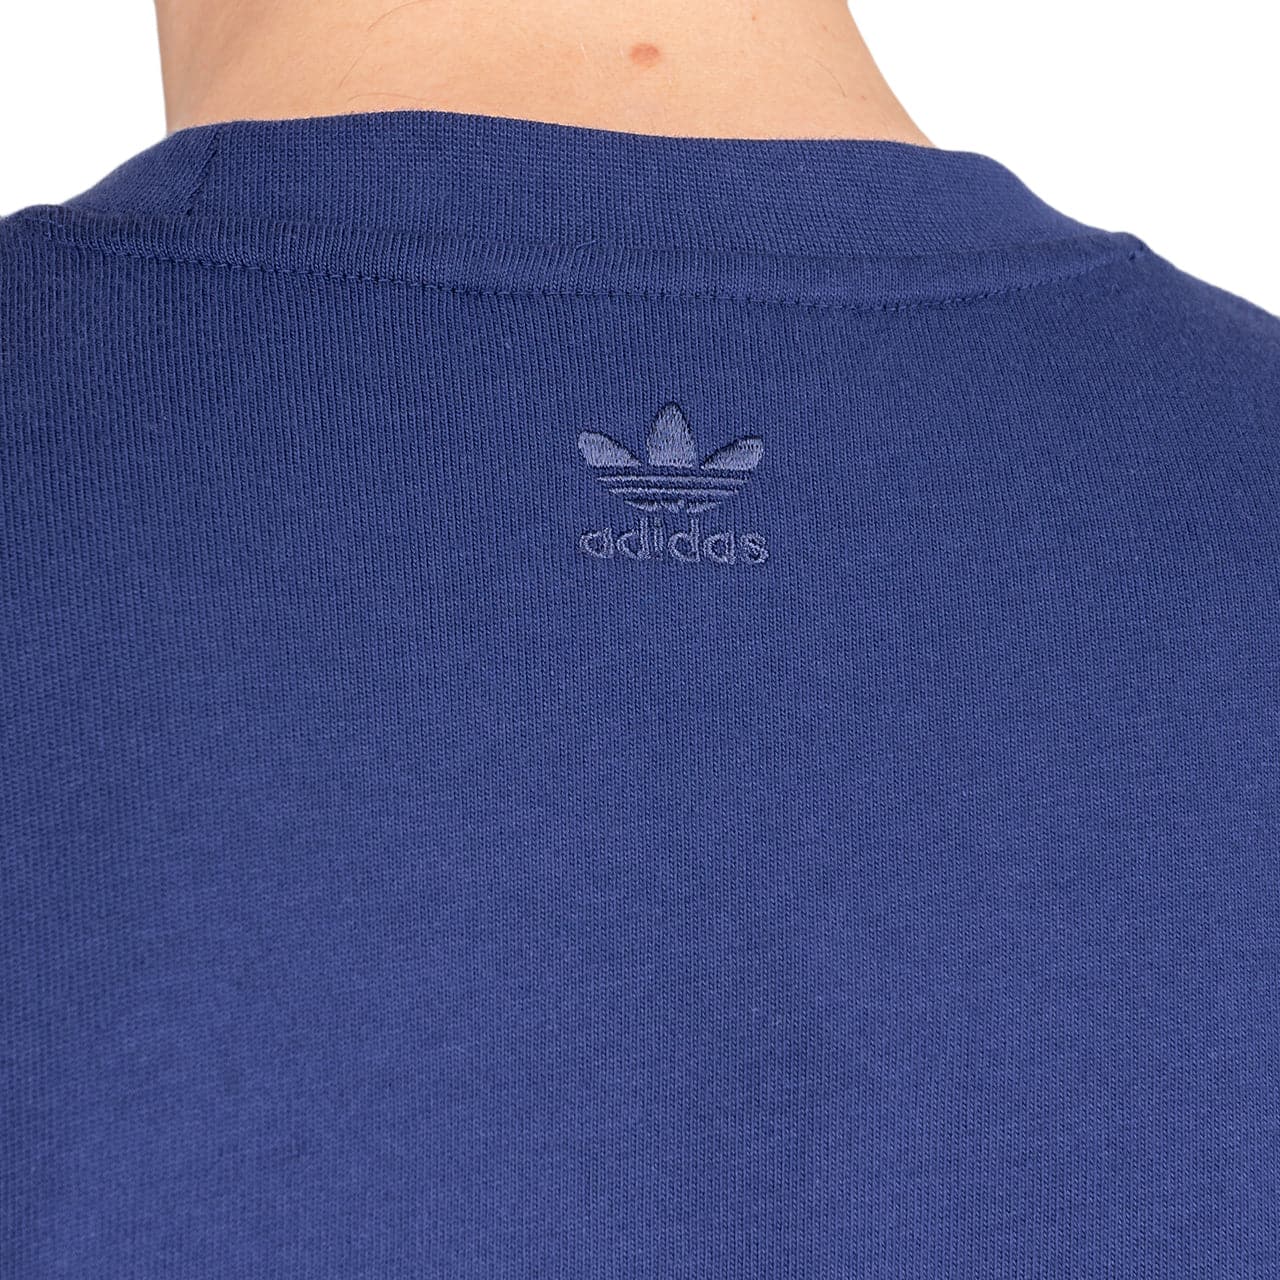 adidas x Pharrell Williams Basics T-Shirt (Navy)  - Allike Store